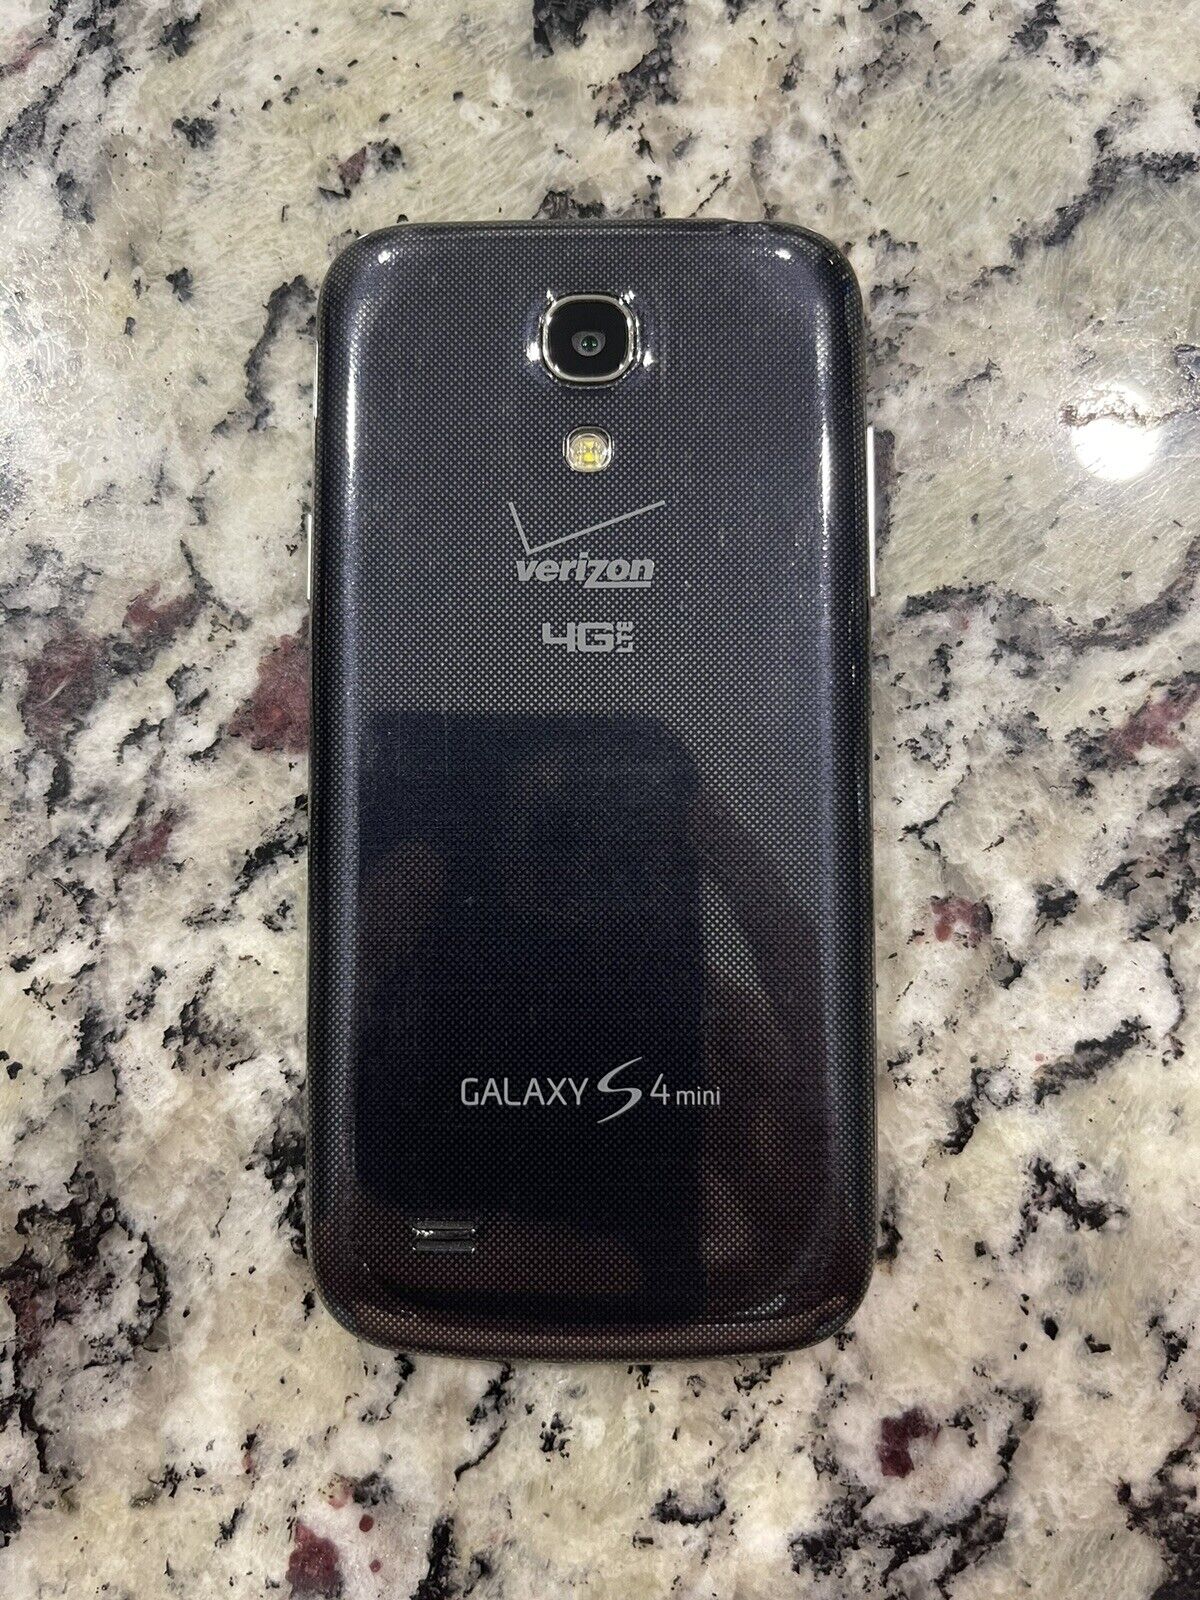 Samsung Galaxy S4 mini SCH-1435 - 16GB - Black Mist (Unlocked) Smartphone WORKS